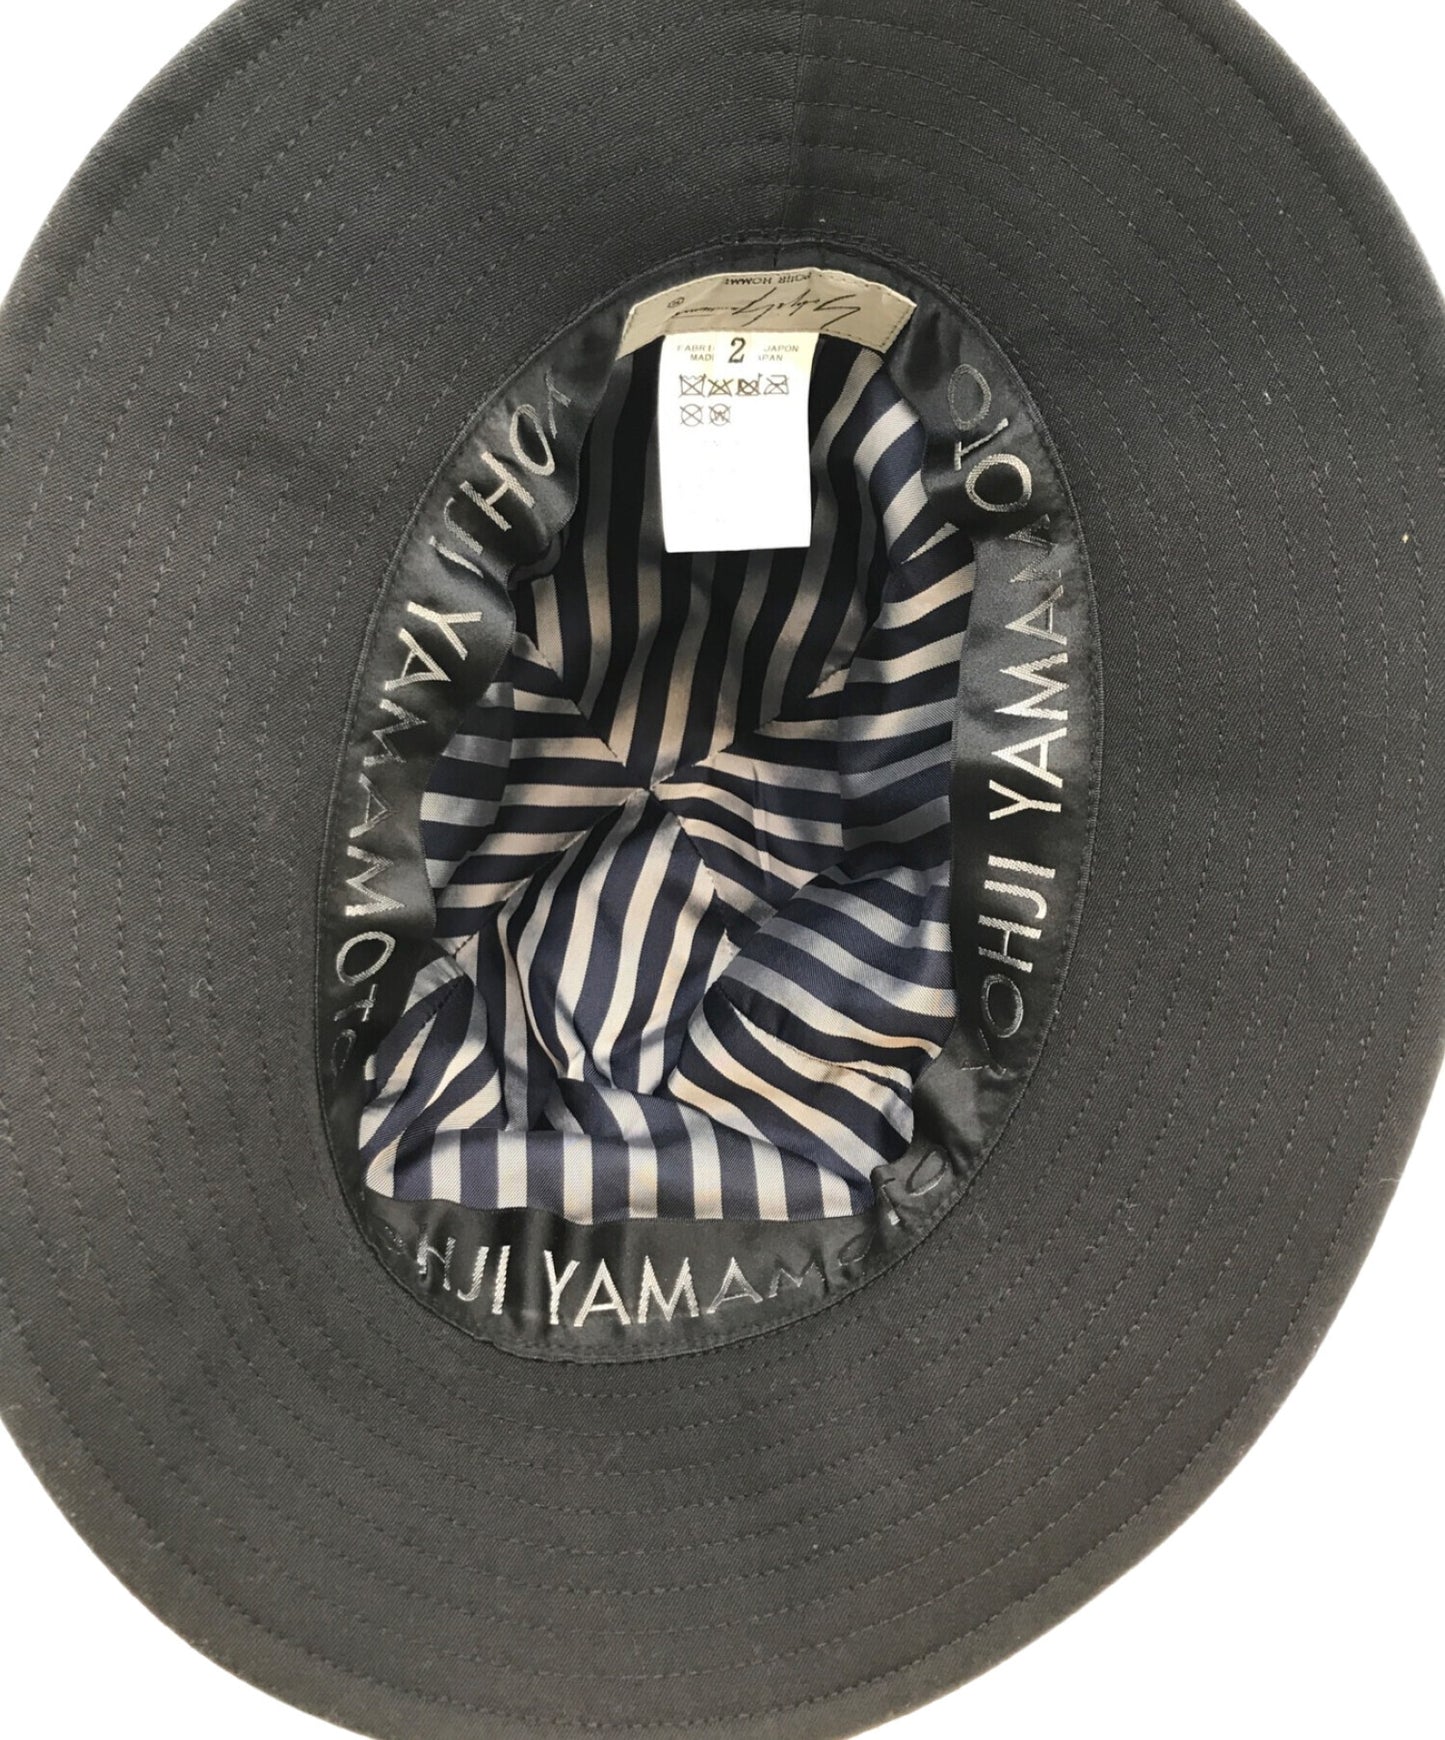 Yohji Yamamoto皺紋Gabardine Fedora Hat HR-H09-100